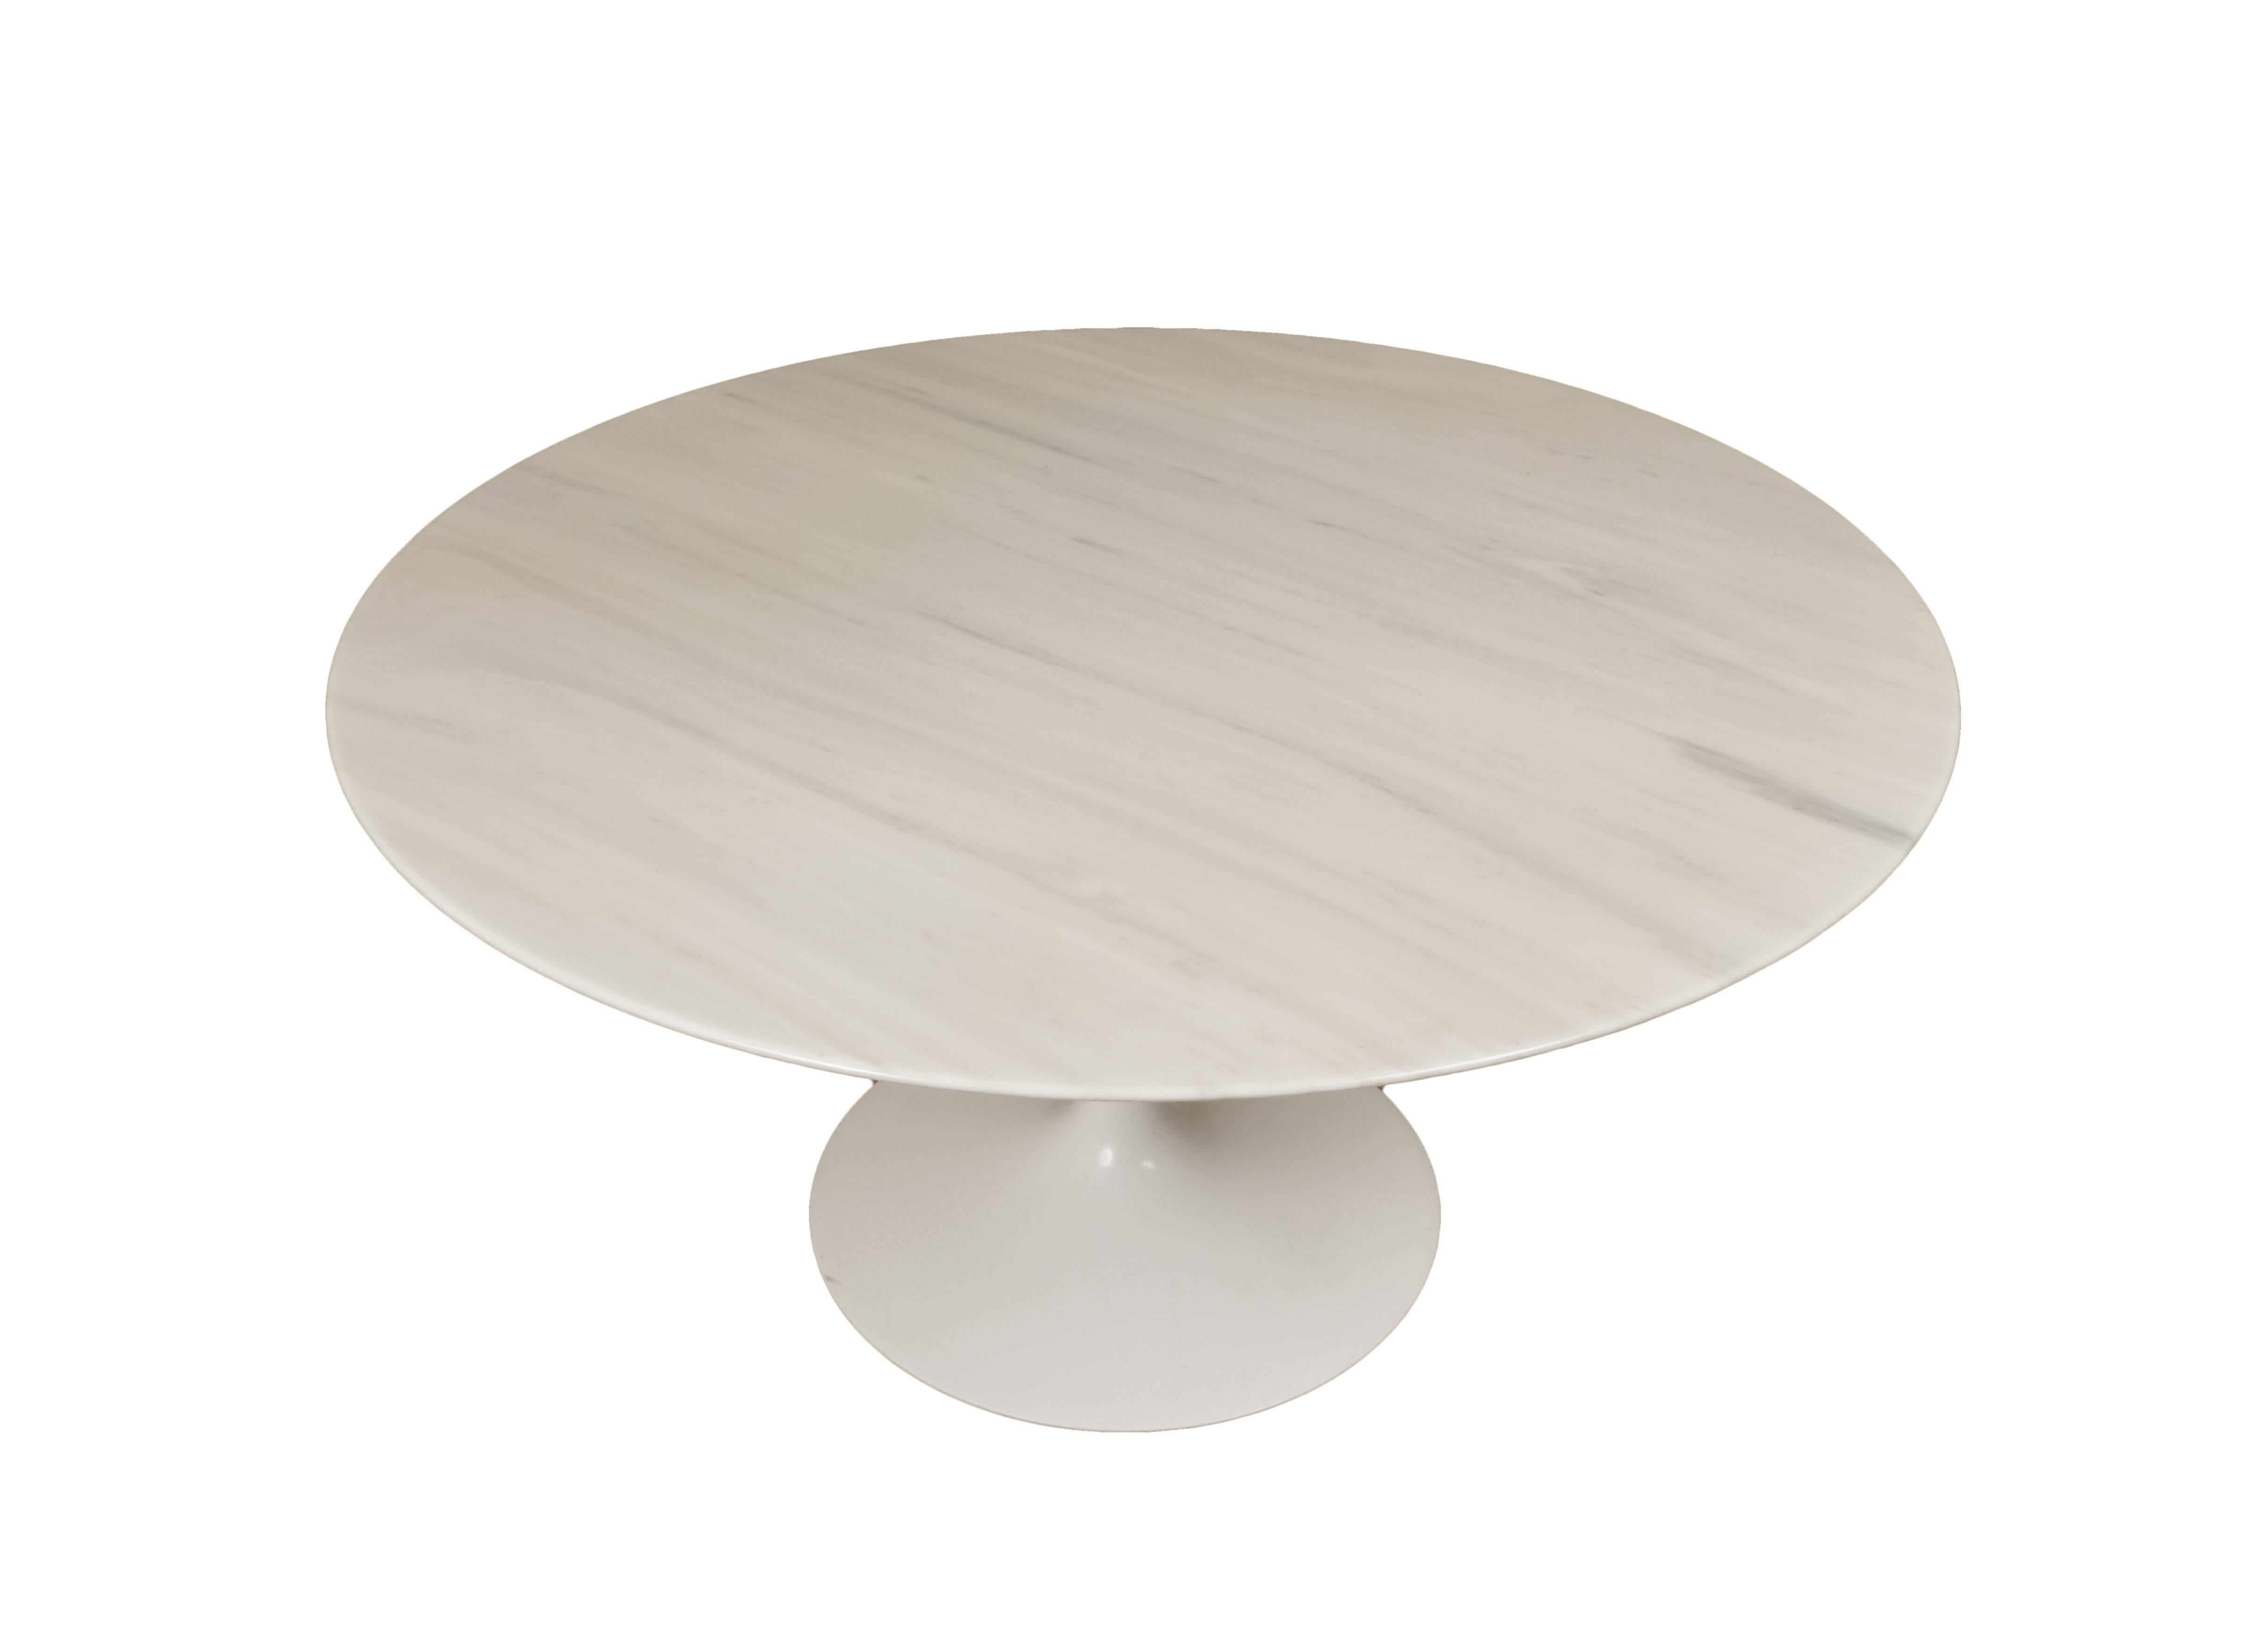 Central American Eero Saarinen Tulip Carrara Marble Dinning Table Round, Knoll International 164